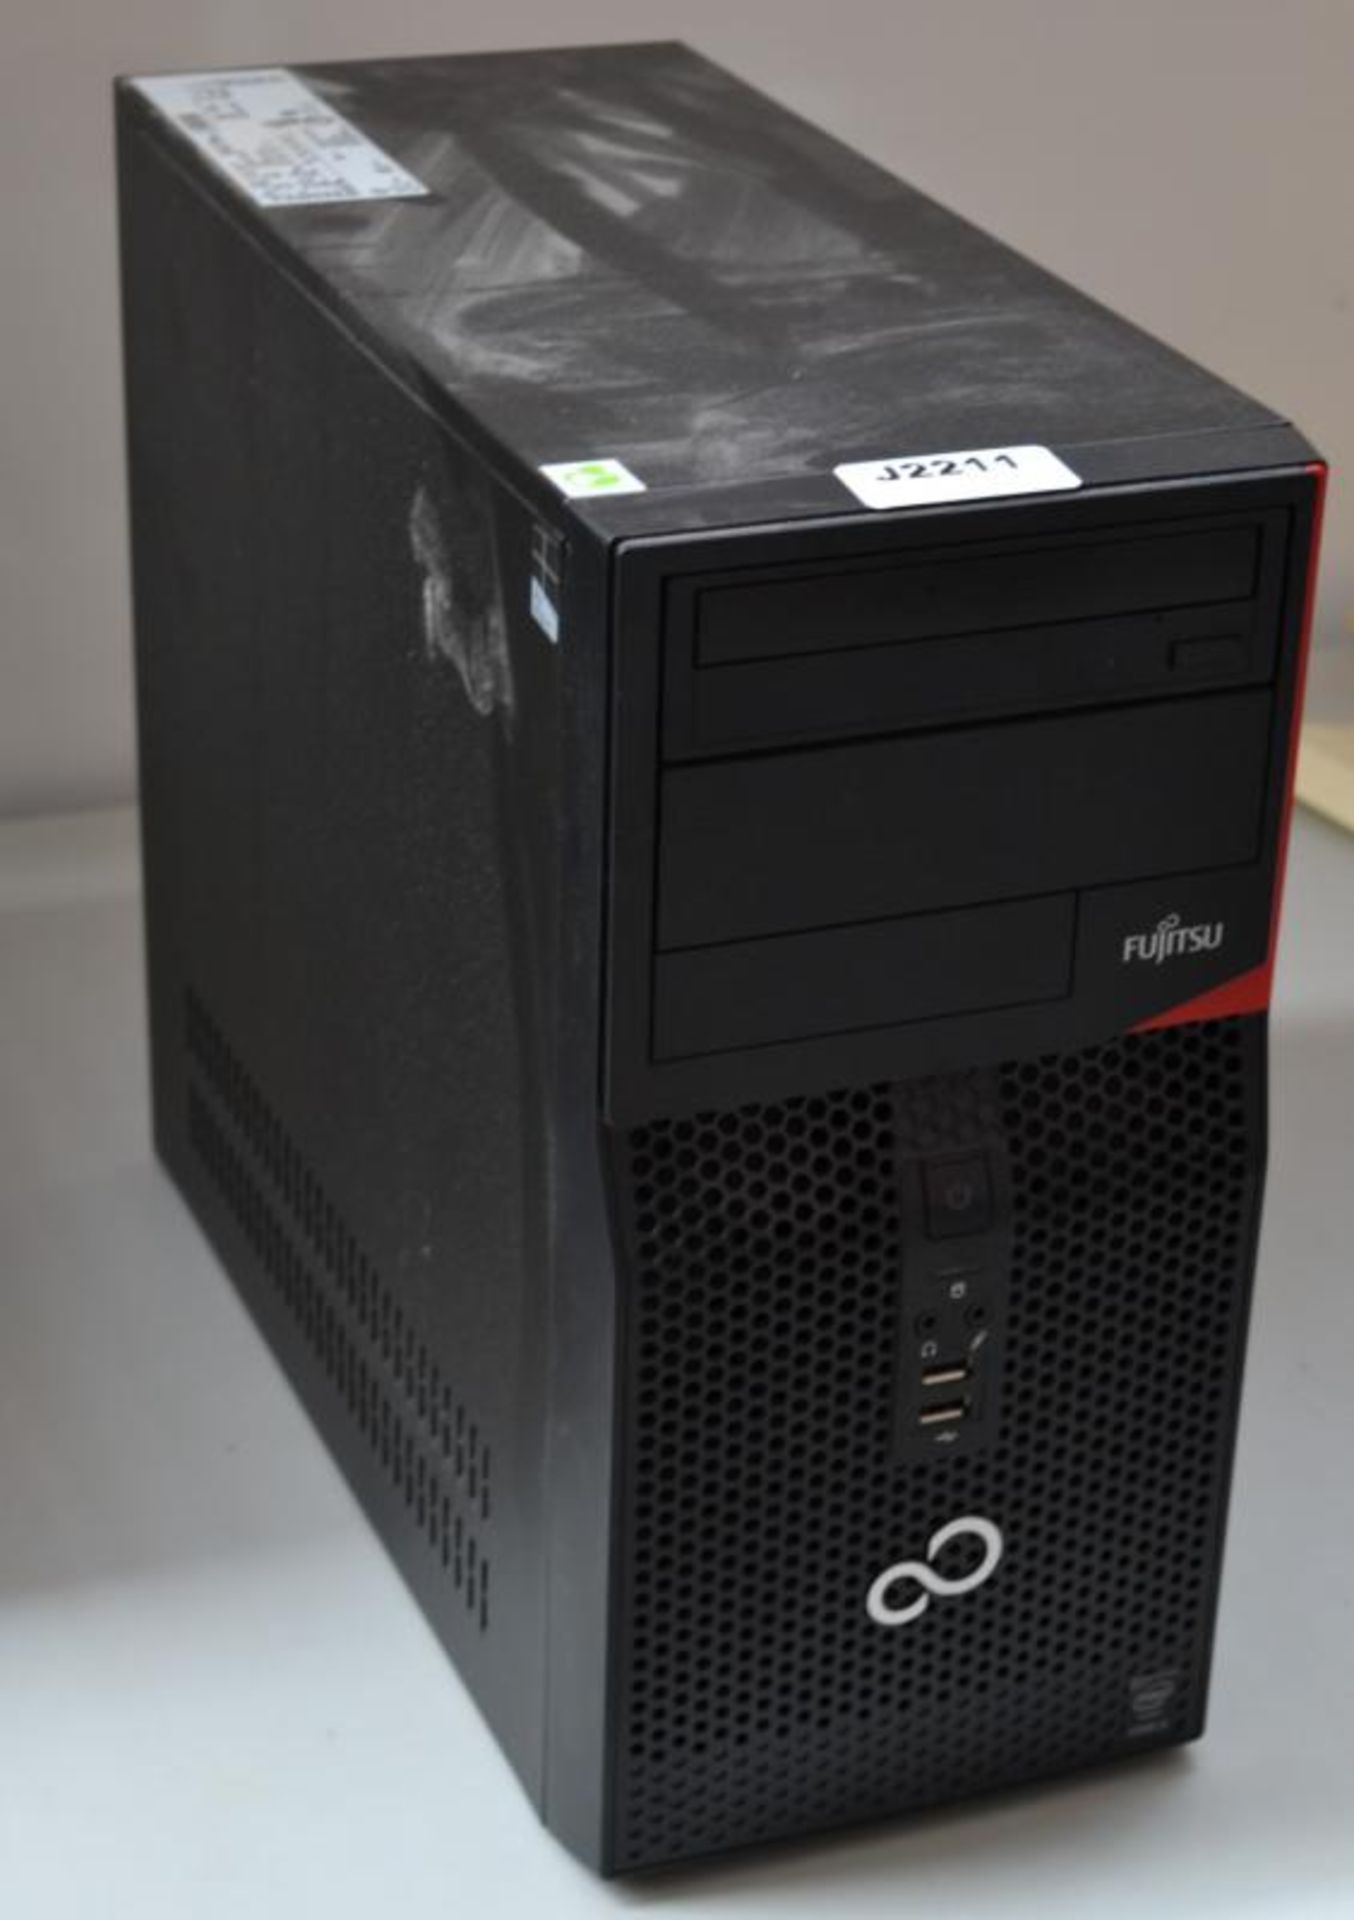 1 x FUJITSU ESPRIMO P400 DESKTOP COMPUTER INTEL I3-2130 3.40GHZ 4GB RAM Hard Drive Not included - R - Image 4 of 4